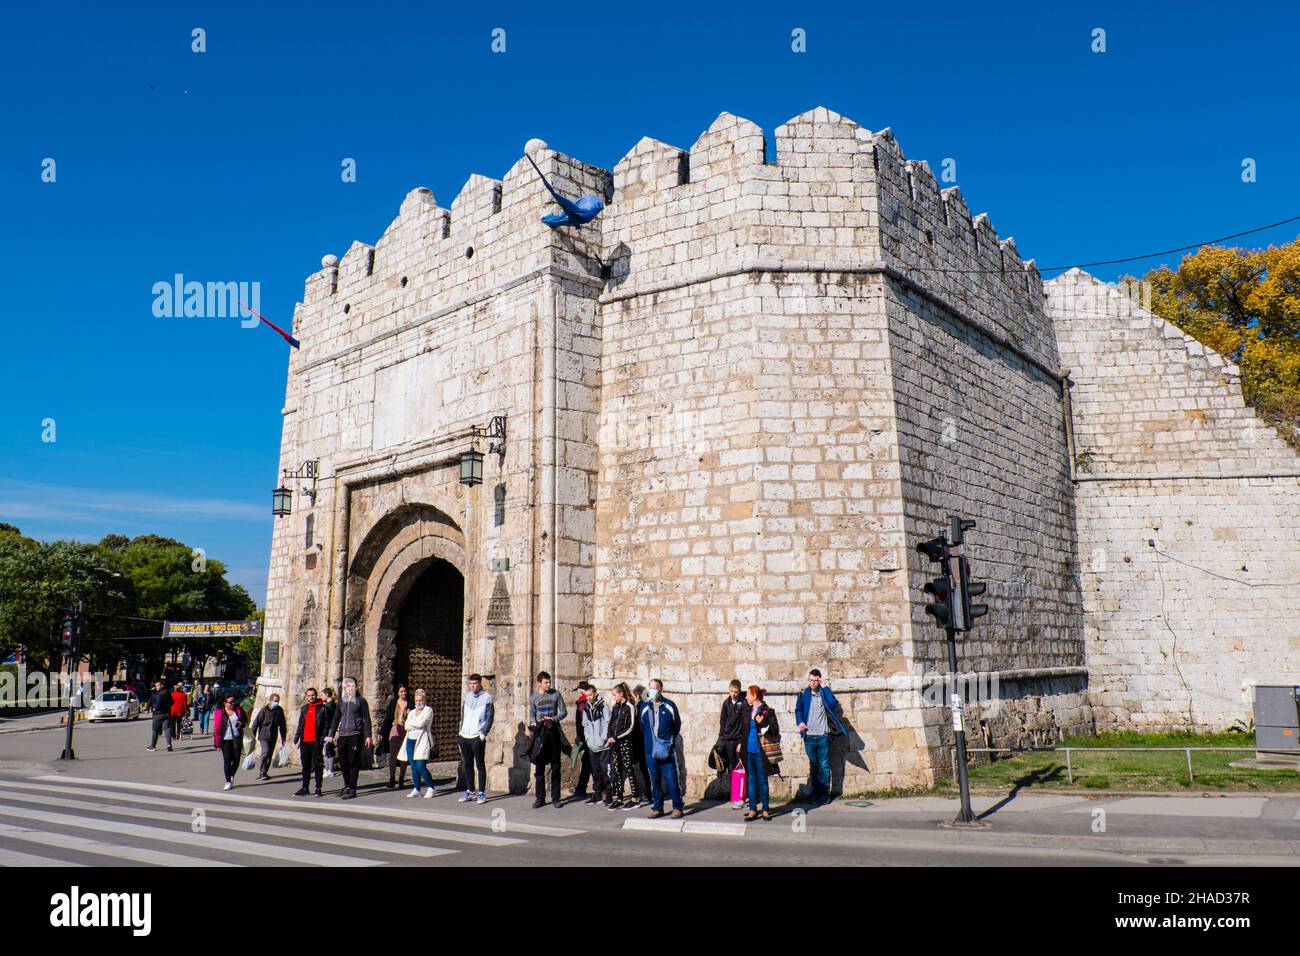 Stambol kapija, Stambol gate, Niška tvrđavam, Niš fortress, Niš, Serbia Stock Photo